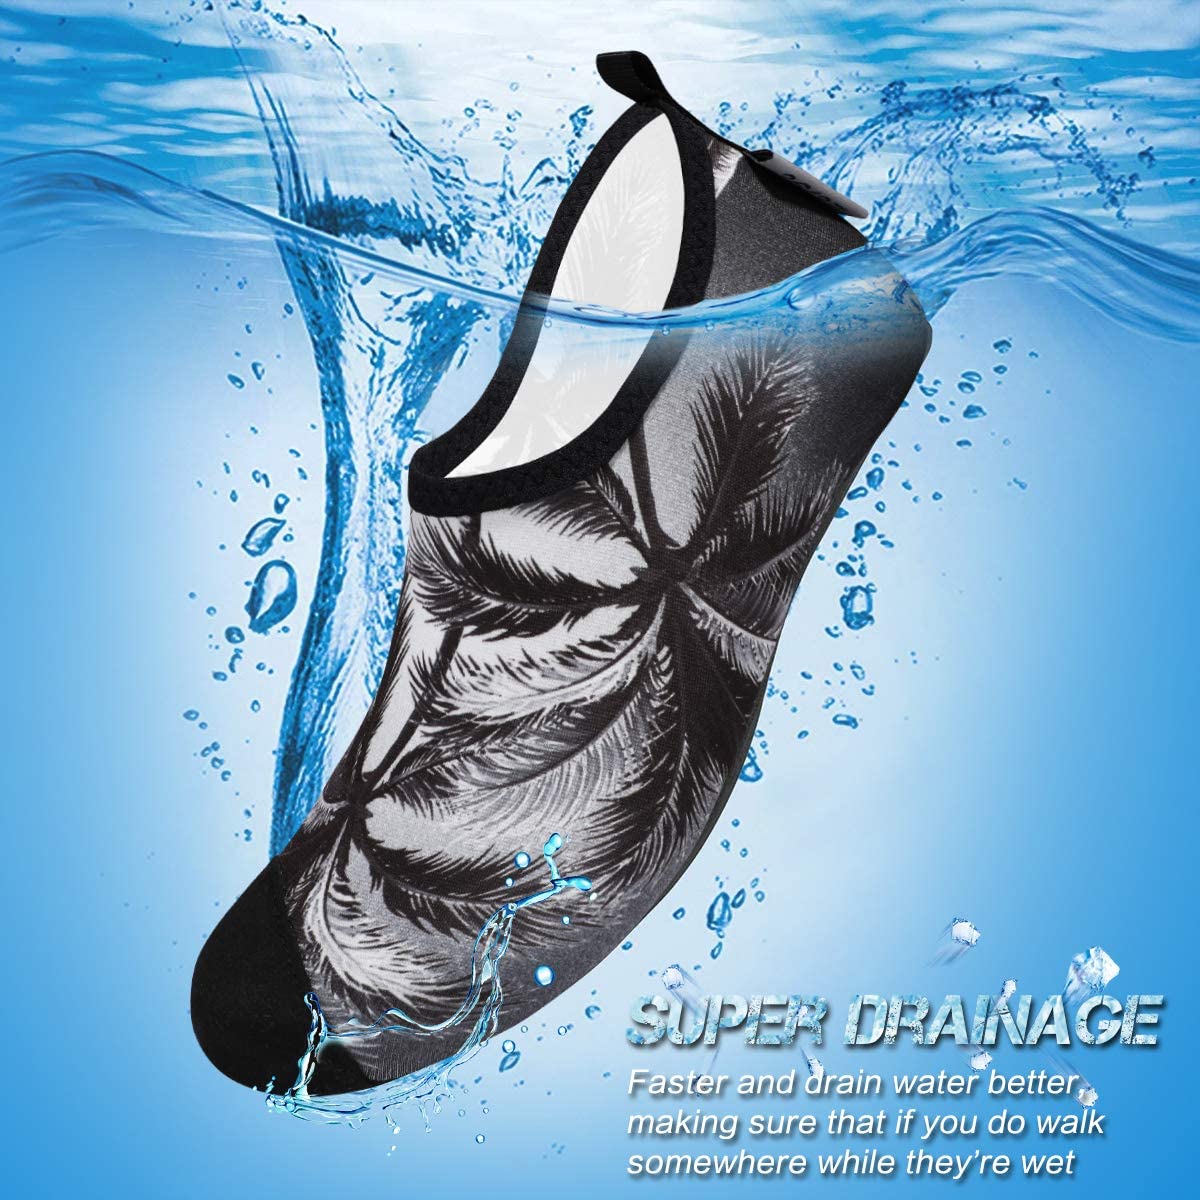 Vifuur Water Shoes Toe Cap Anti-Collision for Men Women